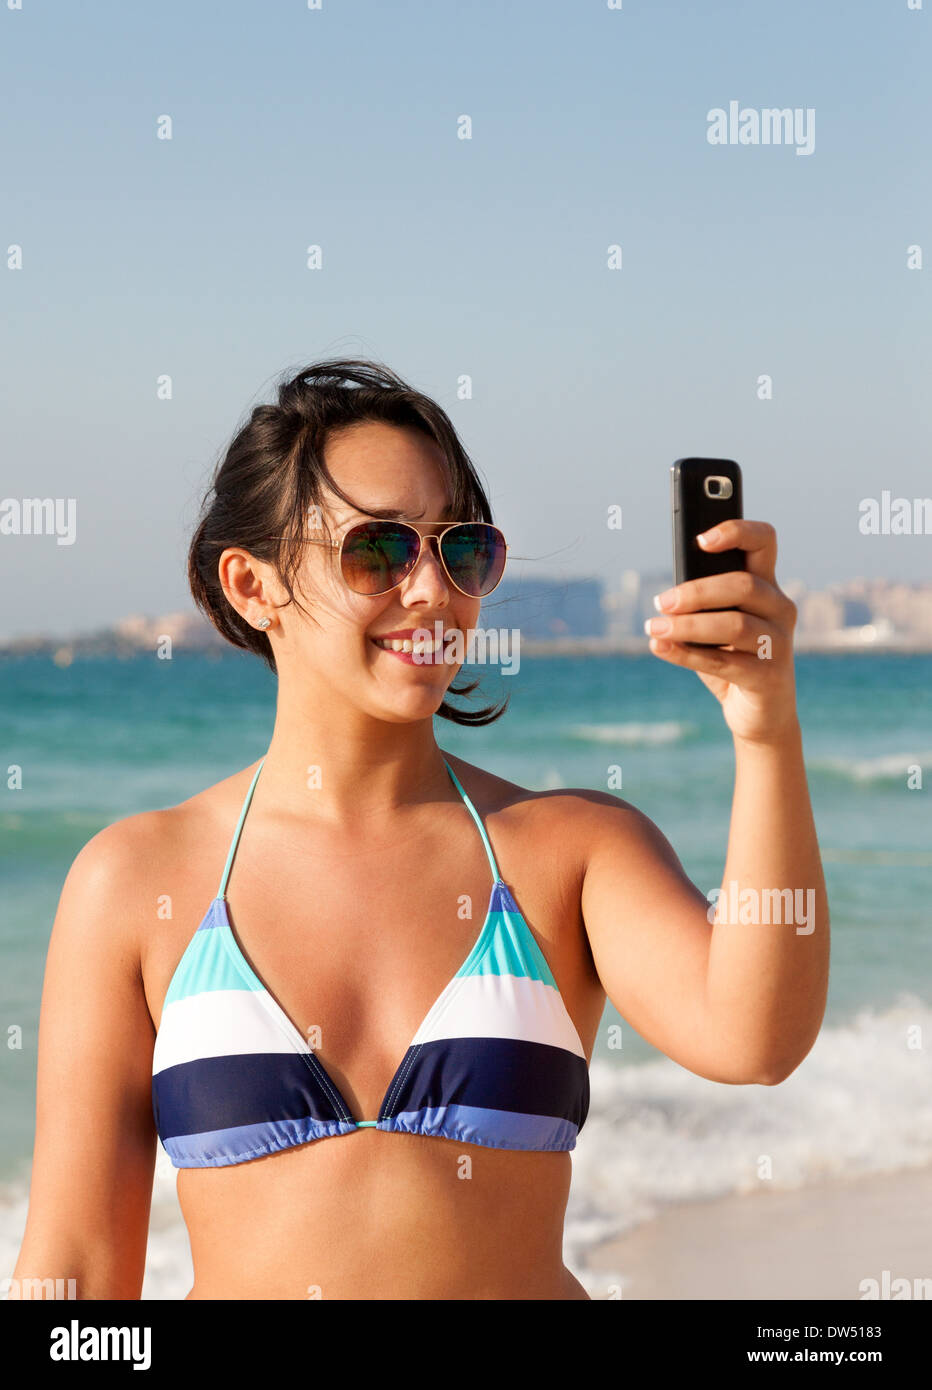 Woman thin bikini hi-res stock photography and images - Alamy